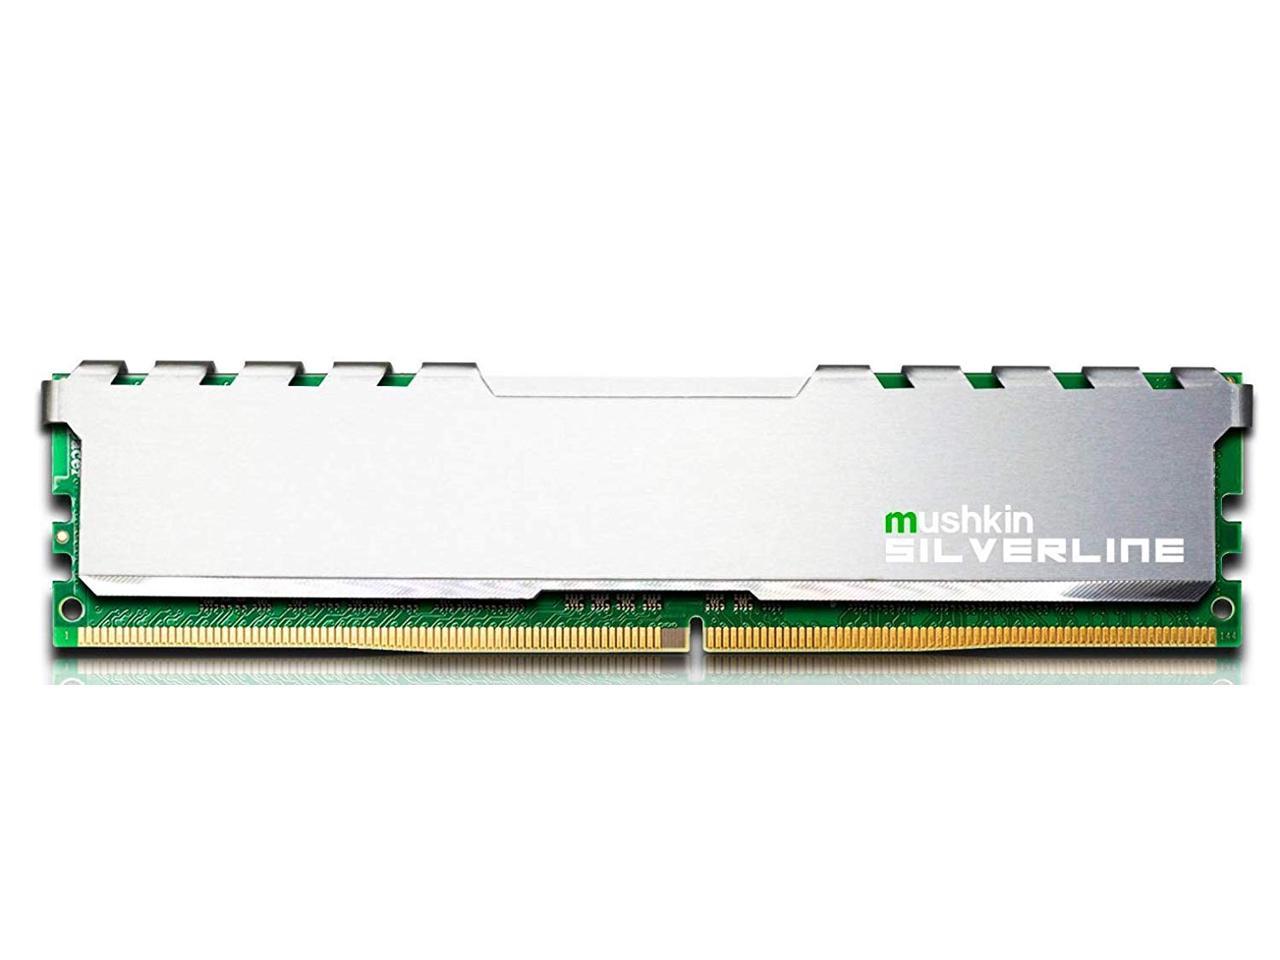 Mushkin 4GB (1X4) Silverline DDR4 UDIMM 2666MHz PC4-21300 Model MSL4U266KF4G